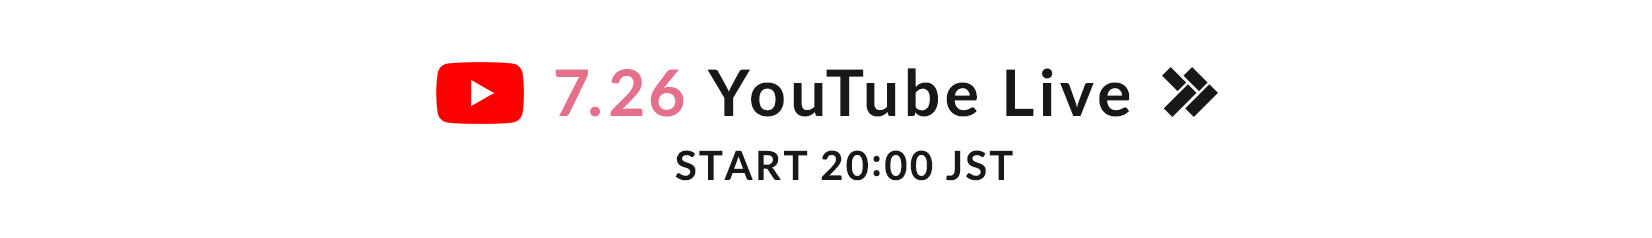 7.26 YouTube Live START 20:00 JST